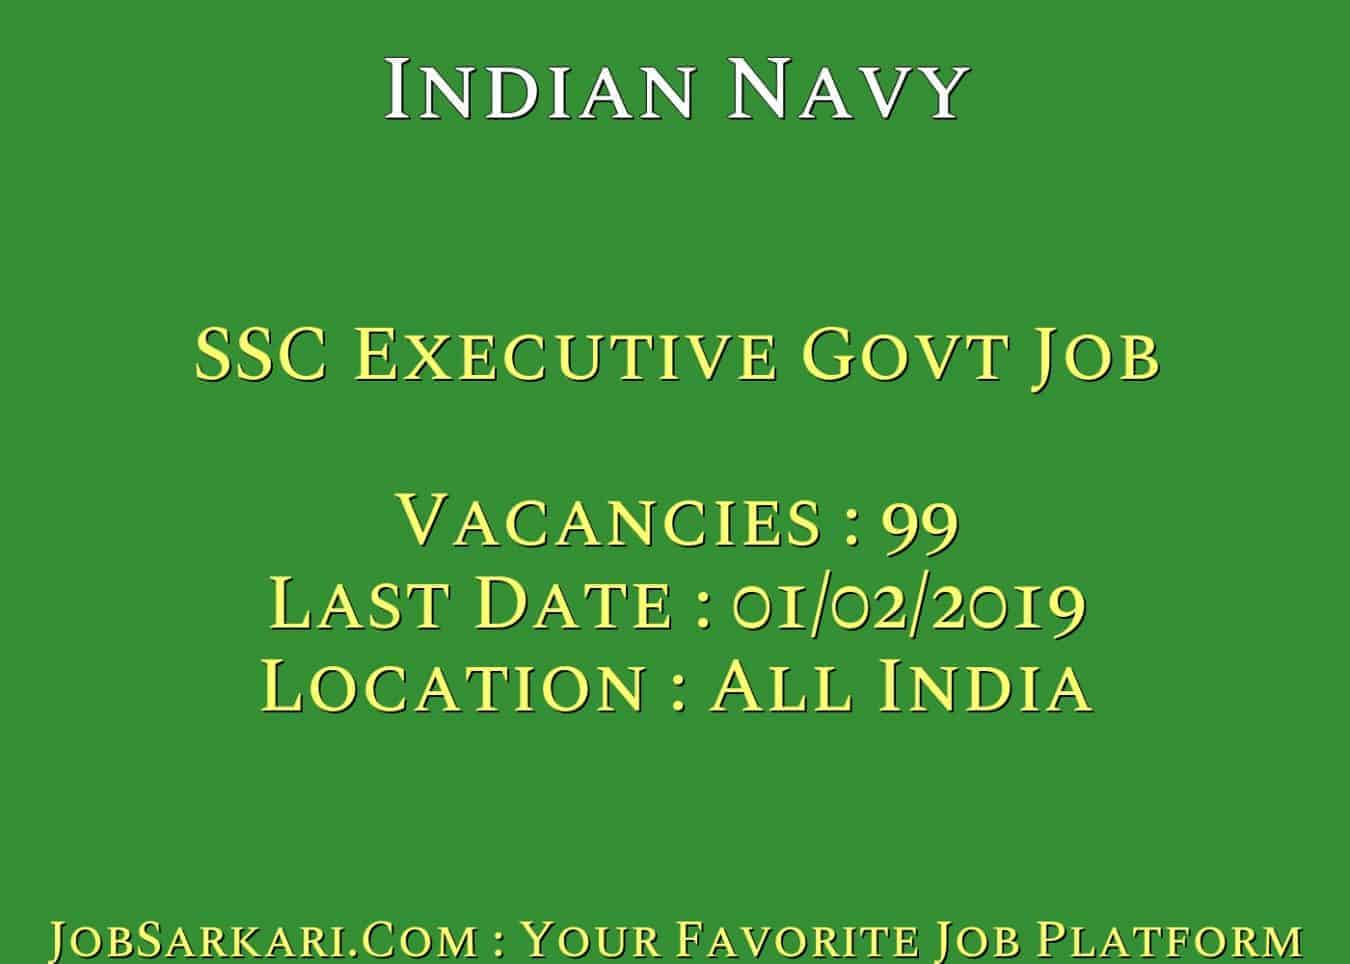 Indian Navy Recruitment 2019 For SSC Executive/ Technical Govt Job